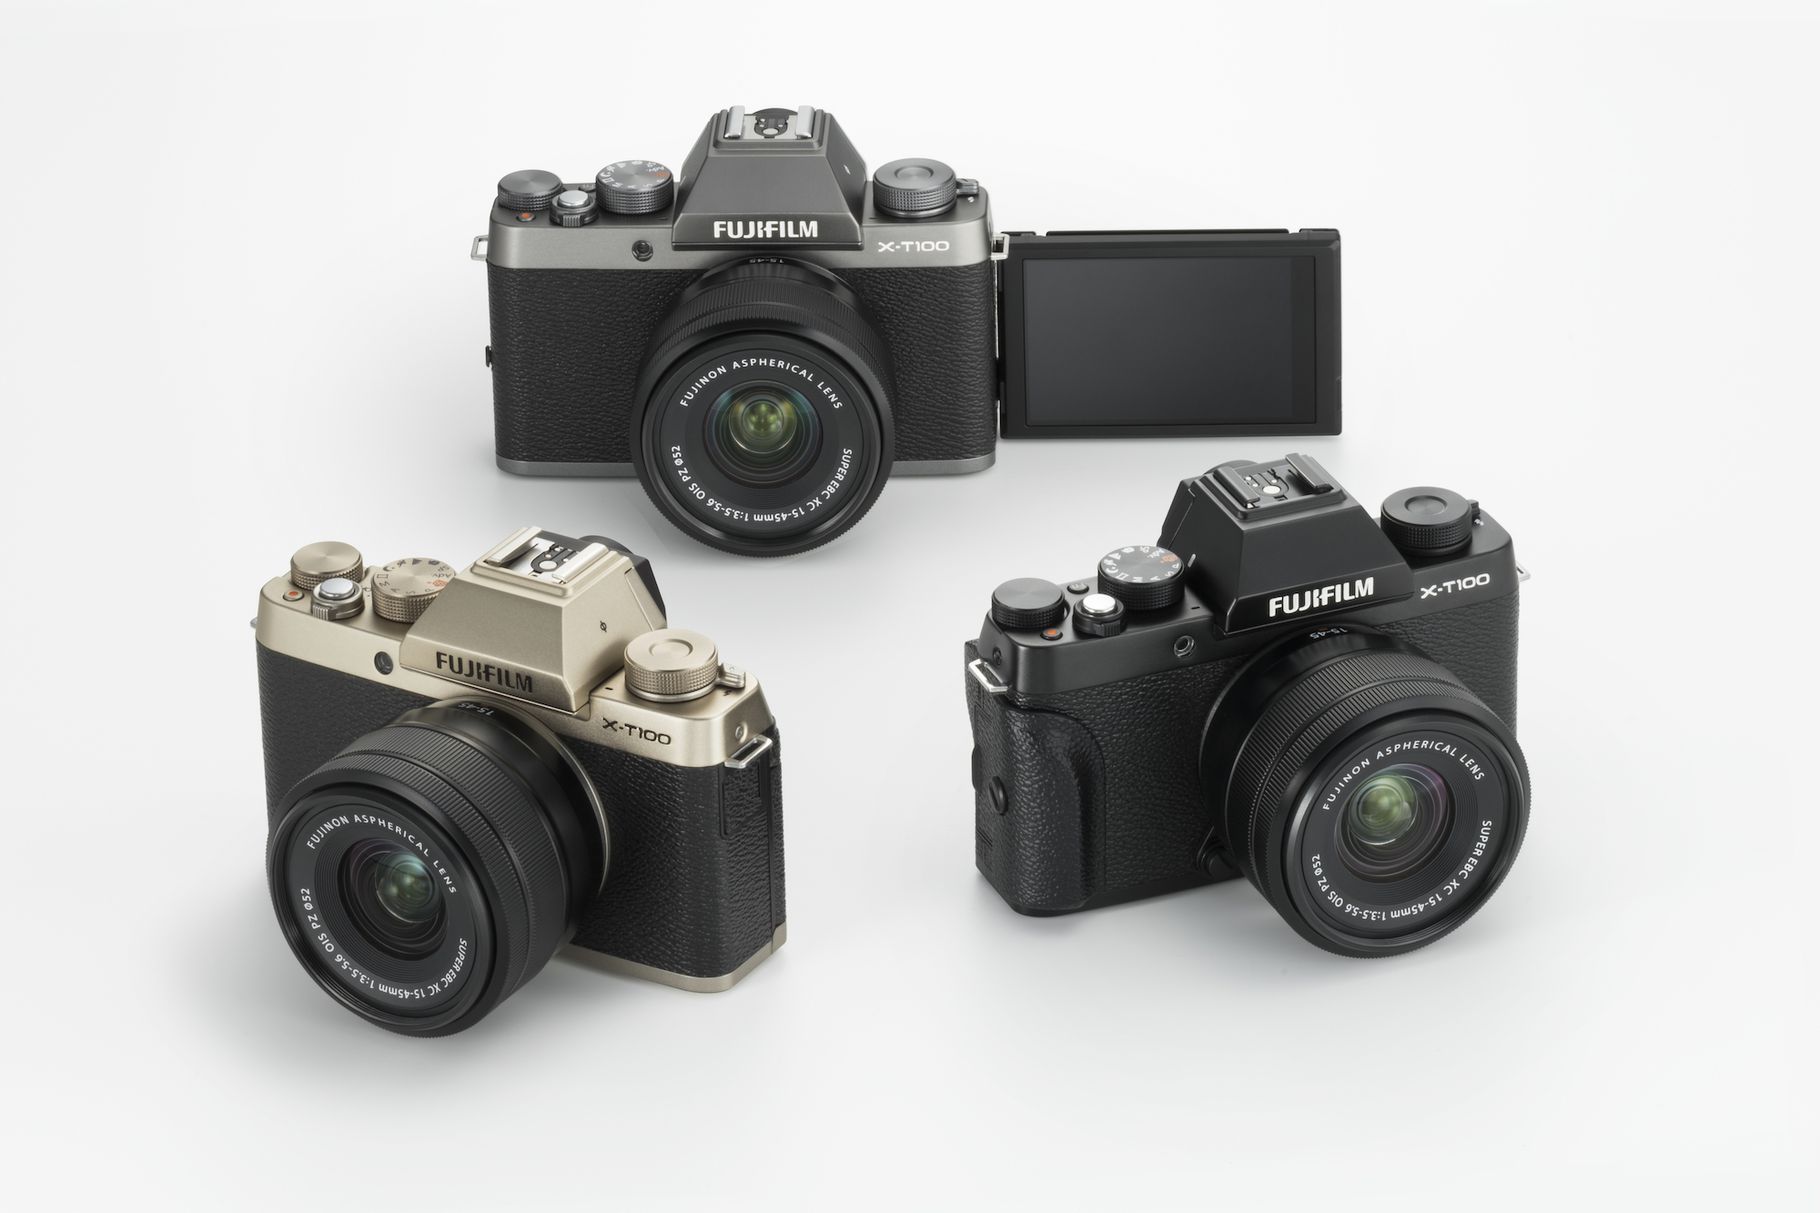 Fujifilm เปิดตัว X-T100 กล้อง Mirrorless ทรง DSLR ระดับน้องเล็กสุด!